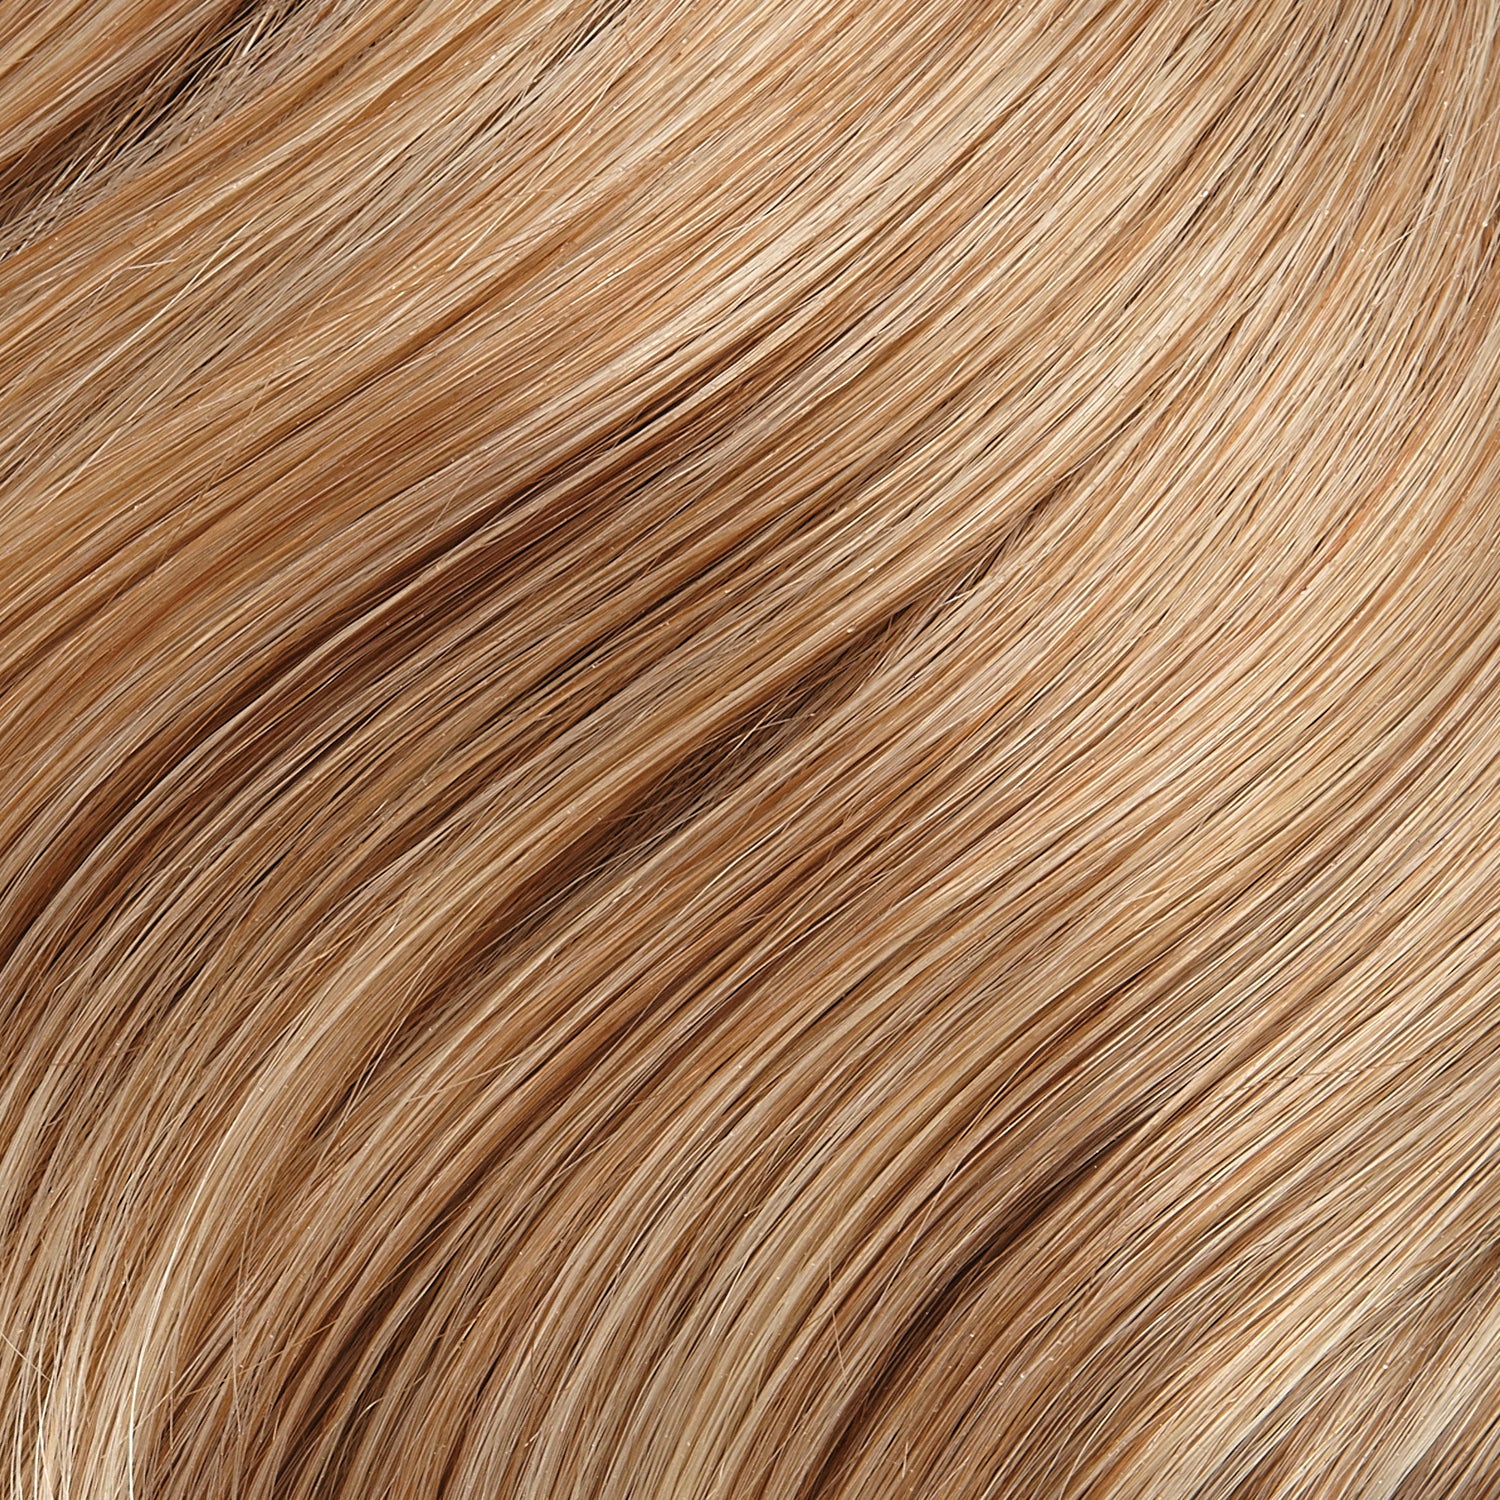 Haute wig - Jon Renau HD Collection